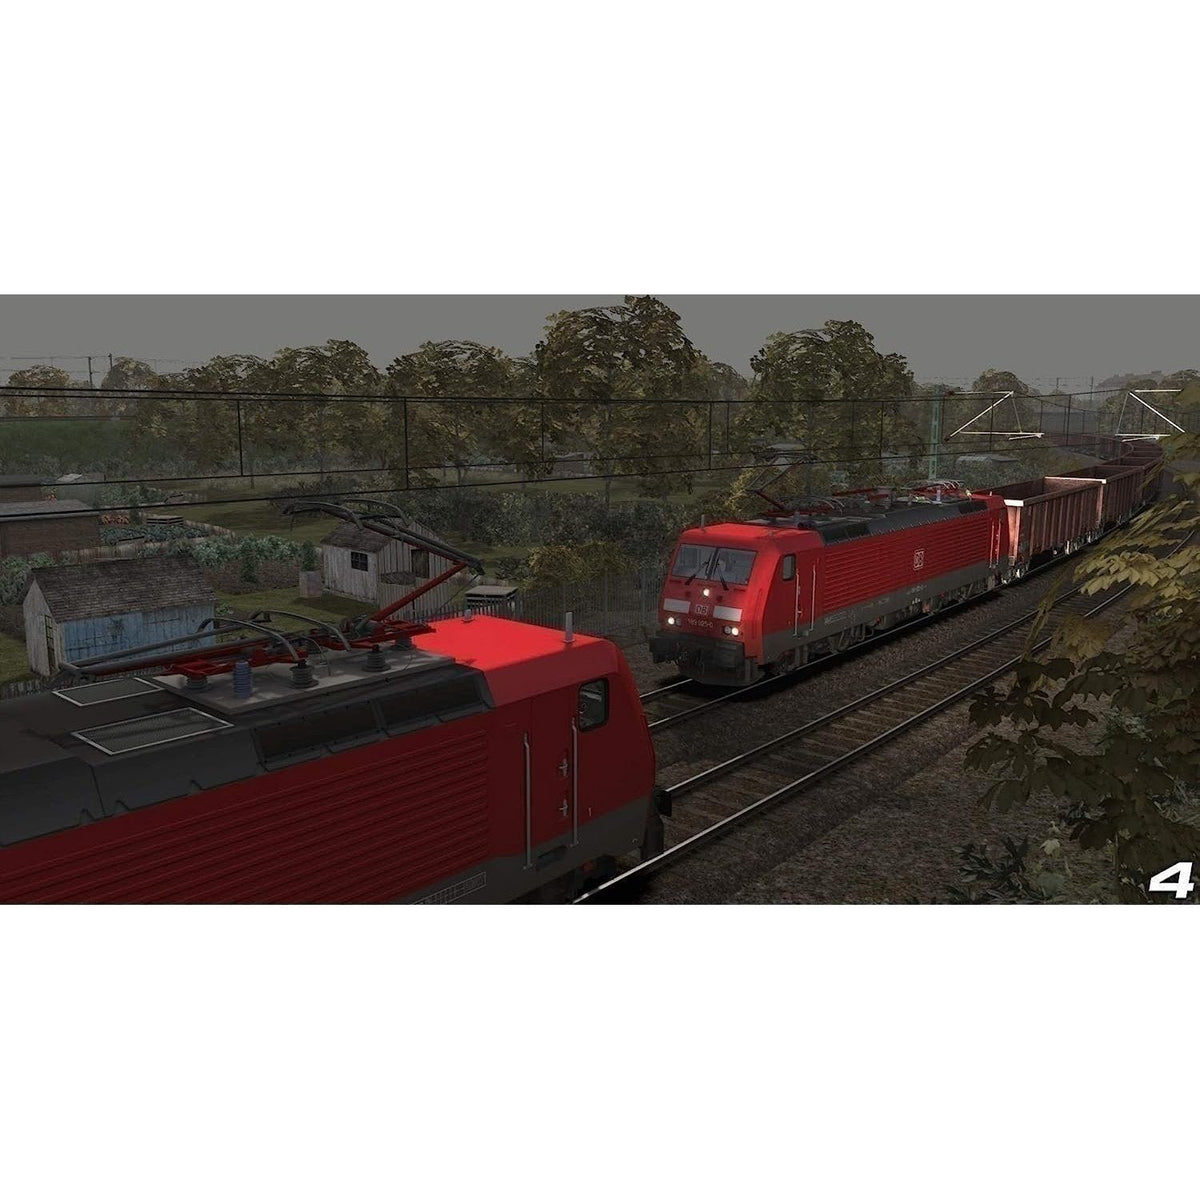 Train Simulator 2019 PC